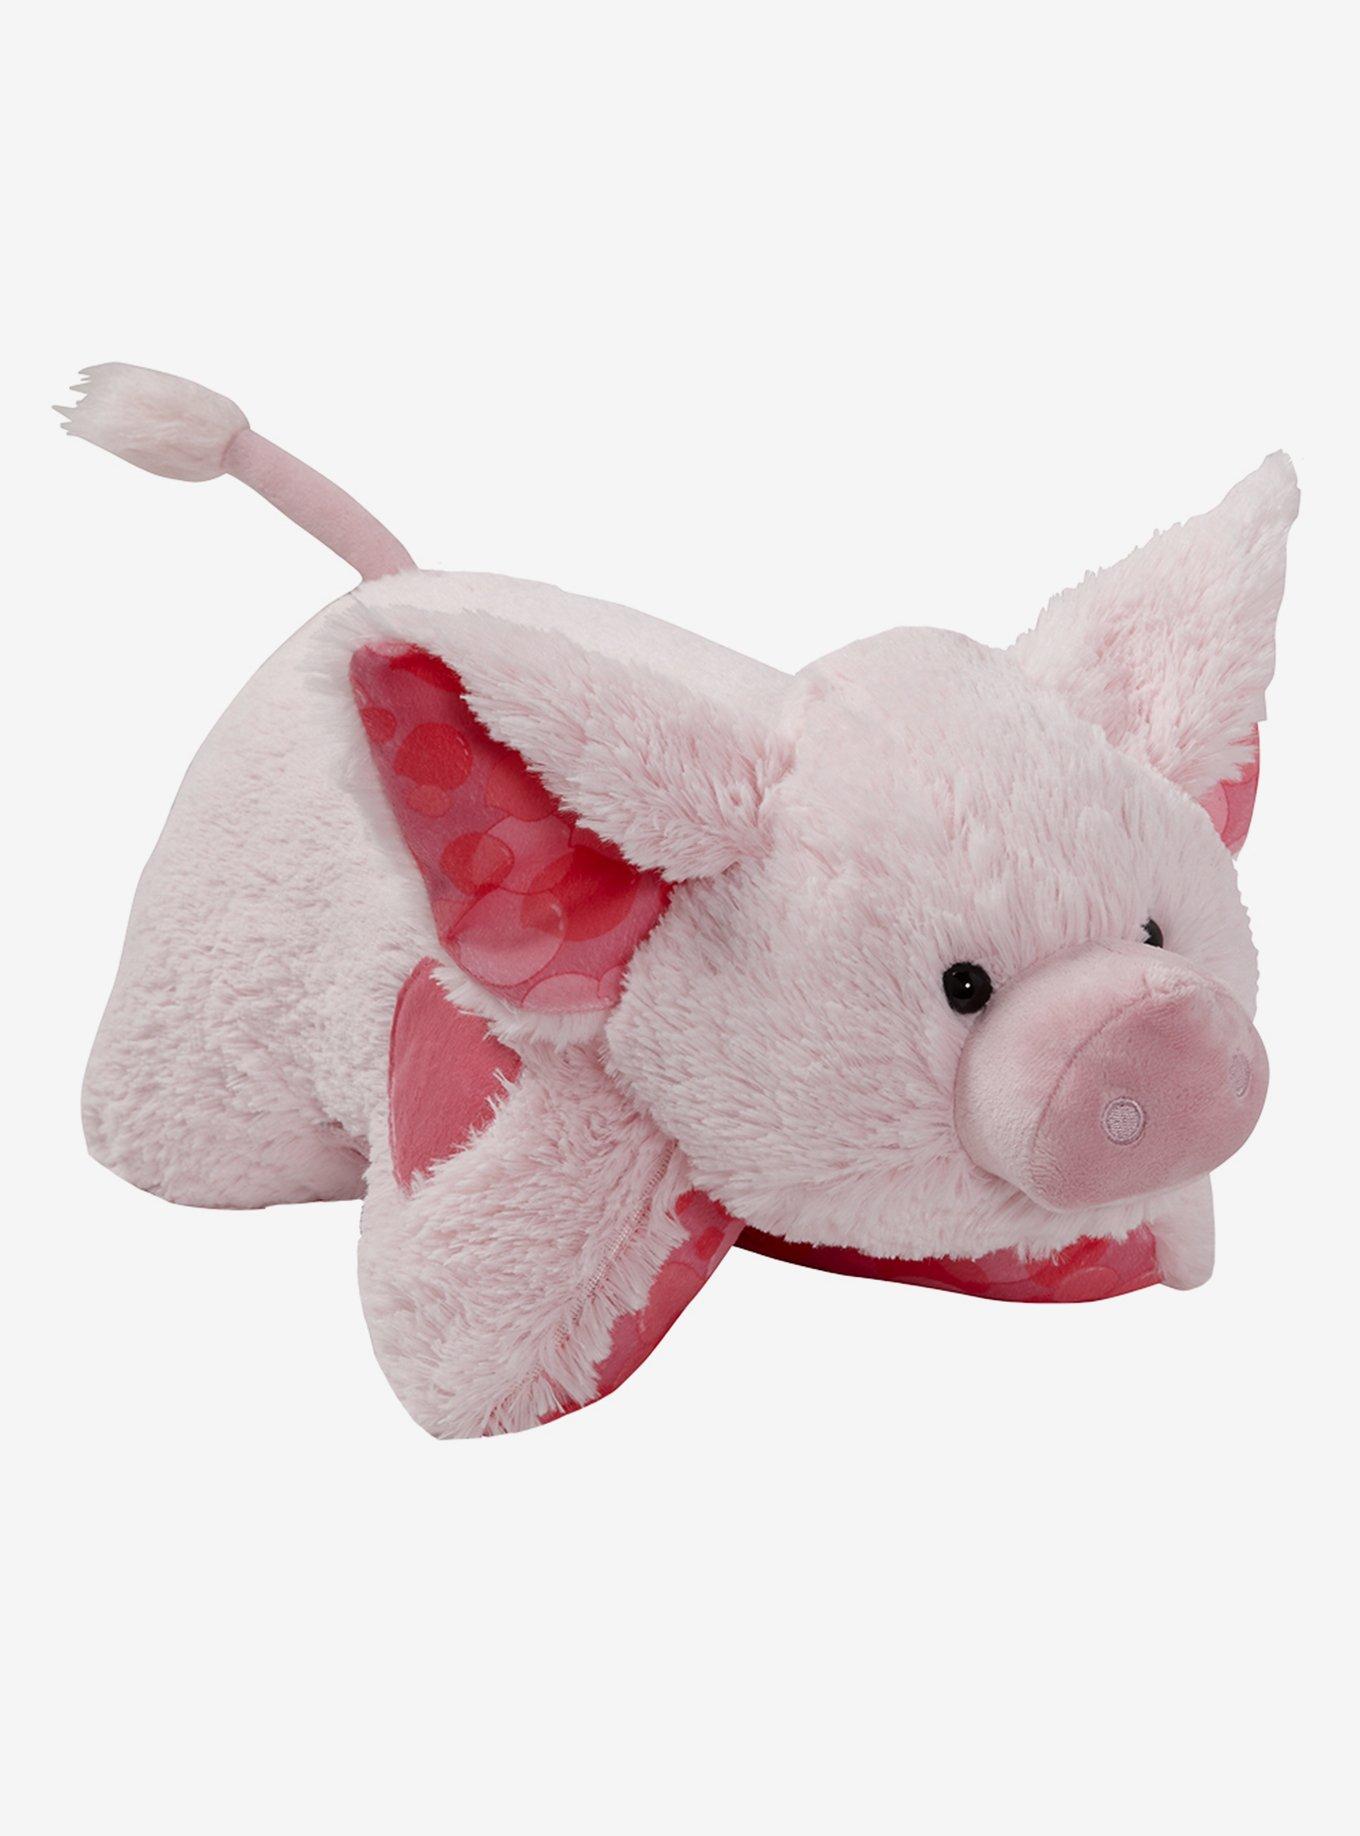 Sweet Scented Bubblegum Pig Pillow Pets Plush Toy